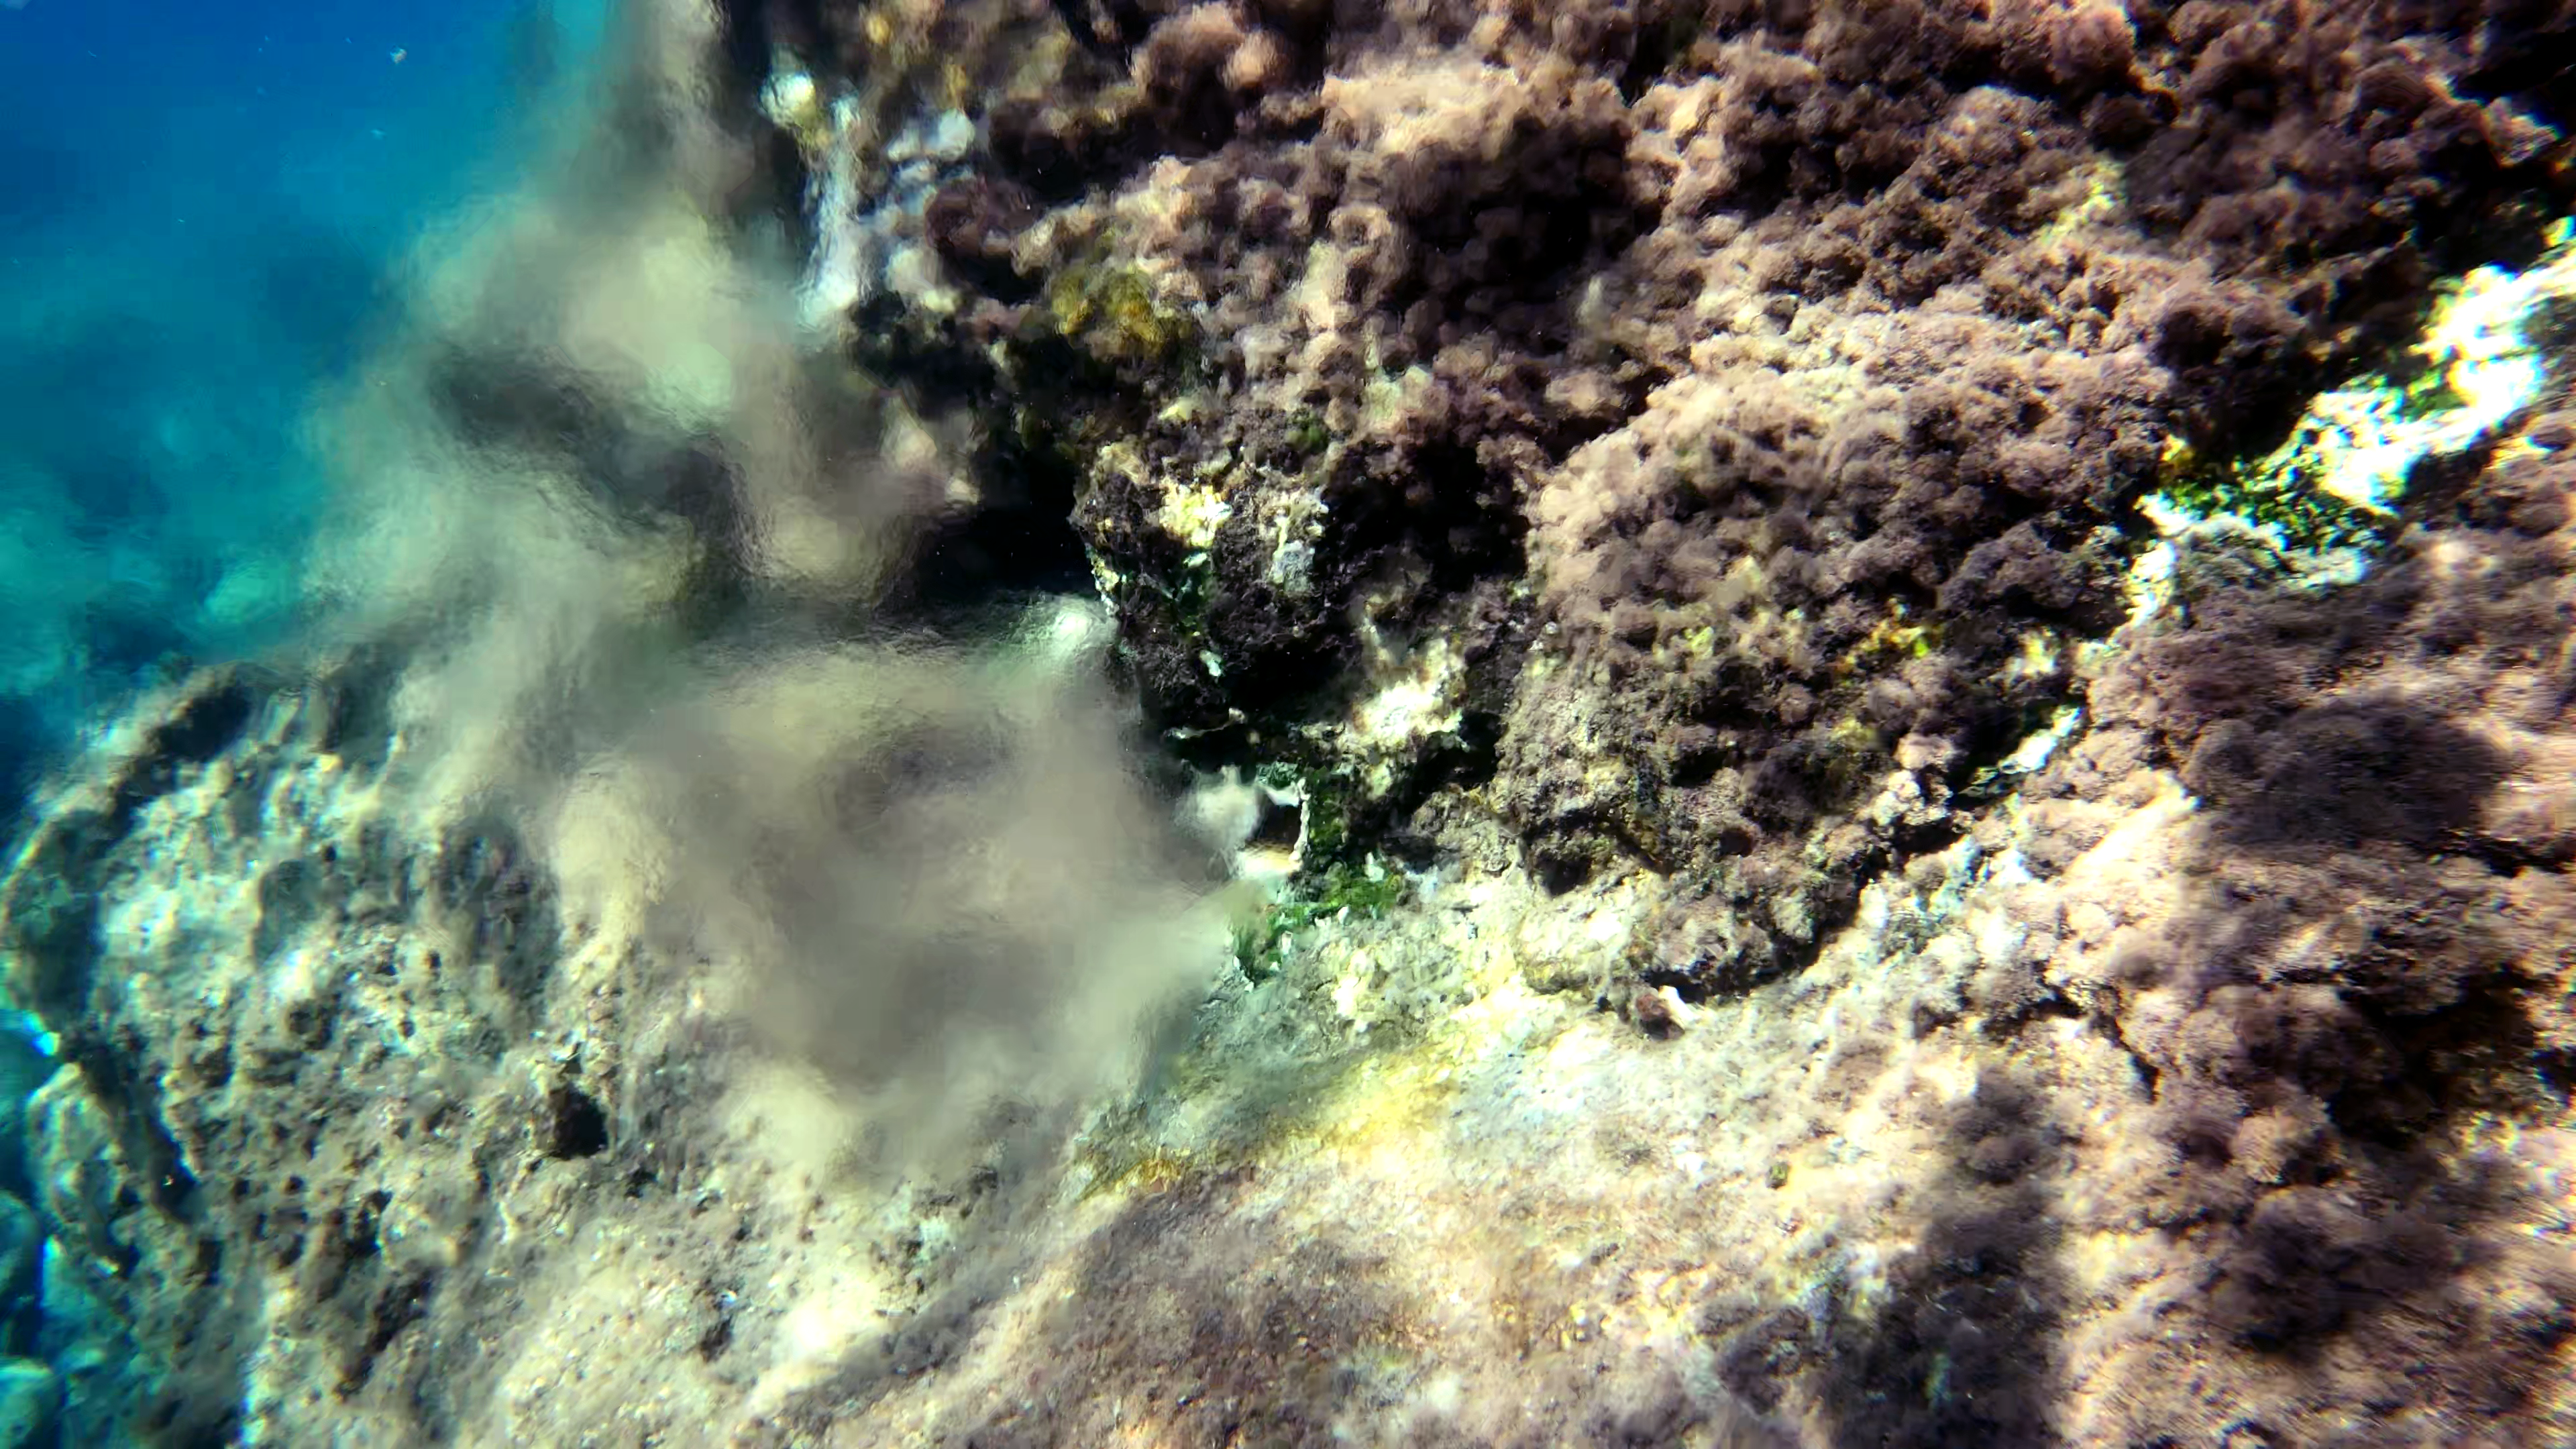 Sorgente vulcanica sottomarina - Underwater volcanic spring - intotheblue.it